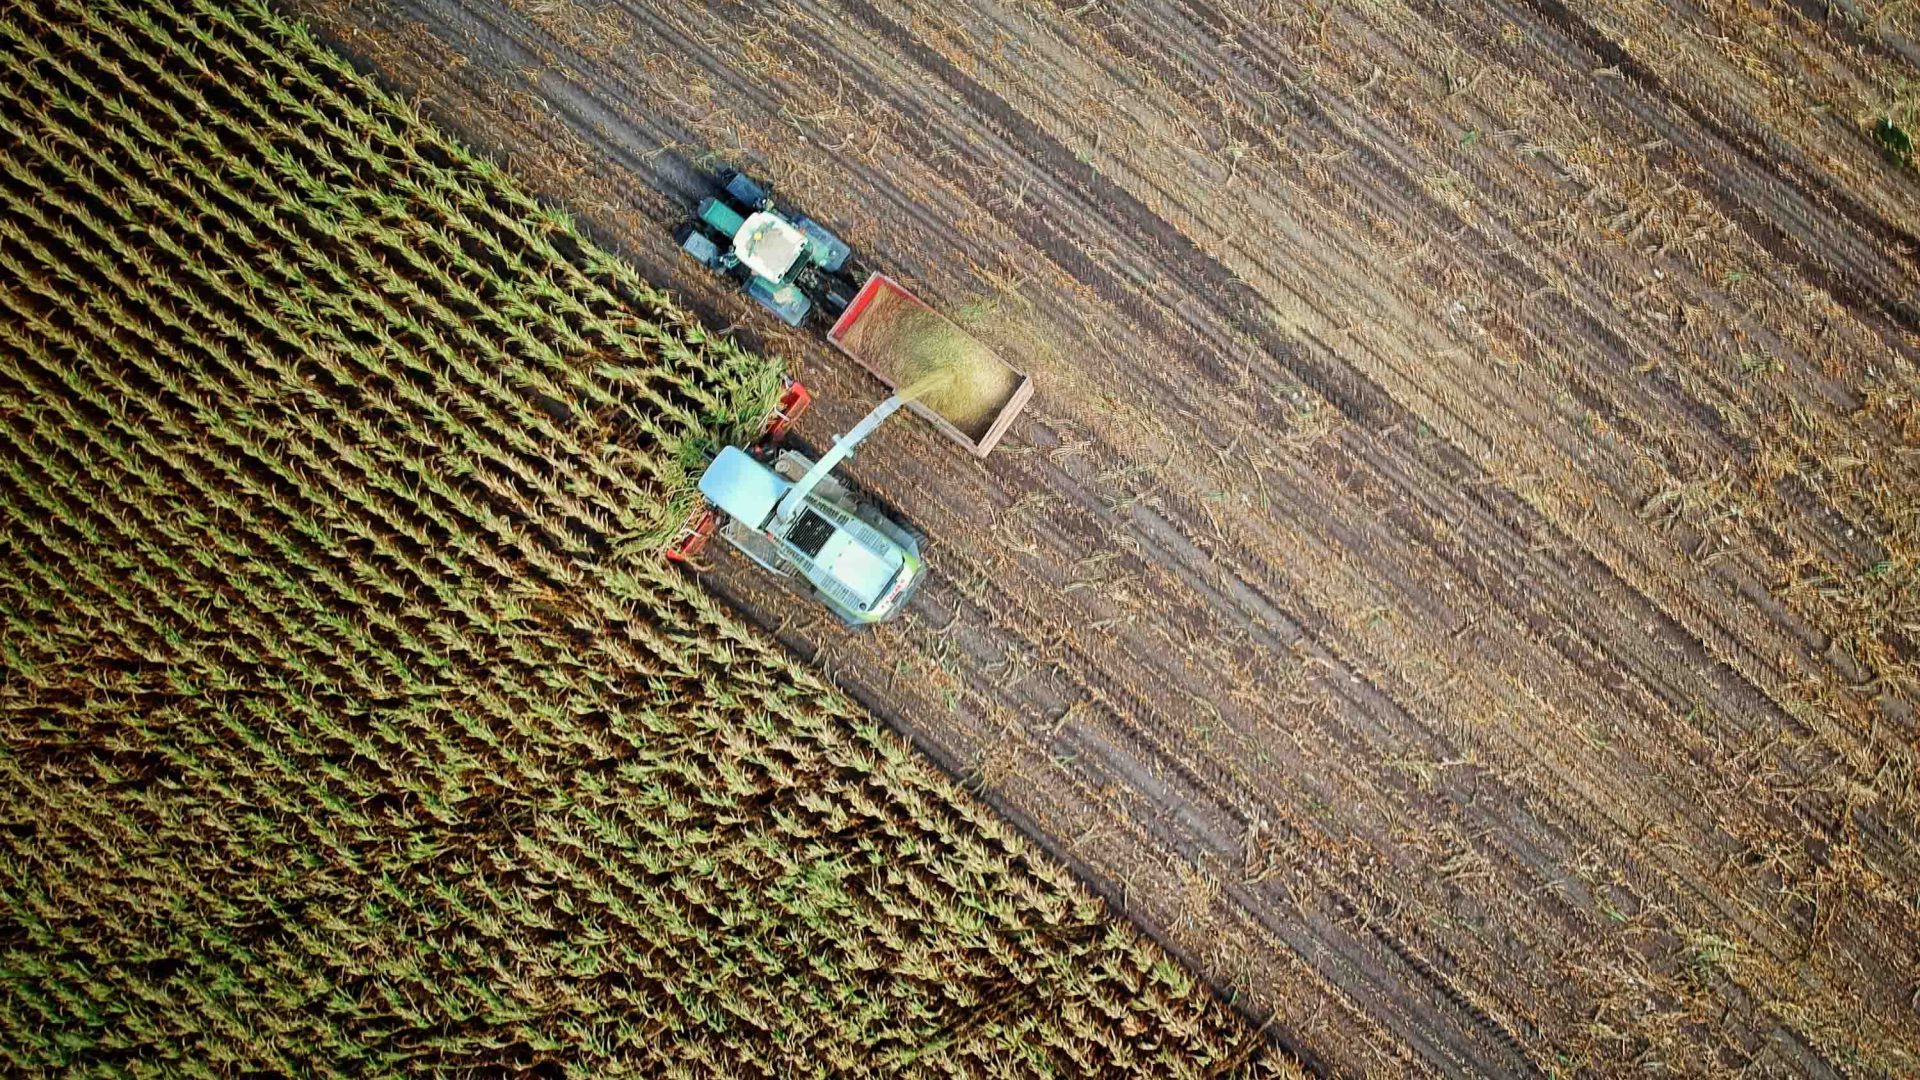 Trucks harvest crops. An aerial view.